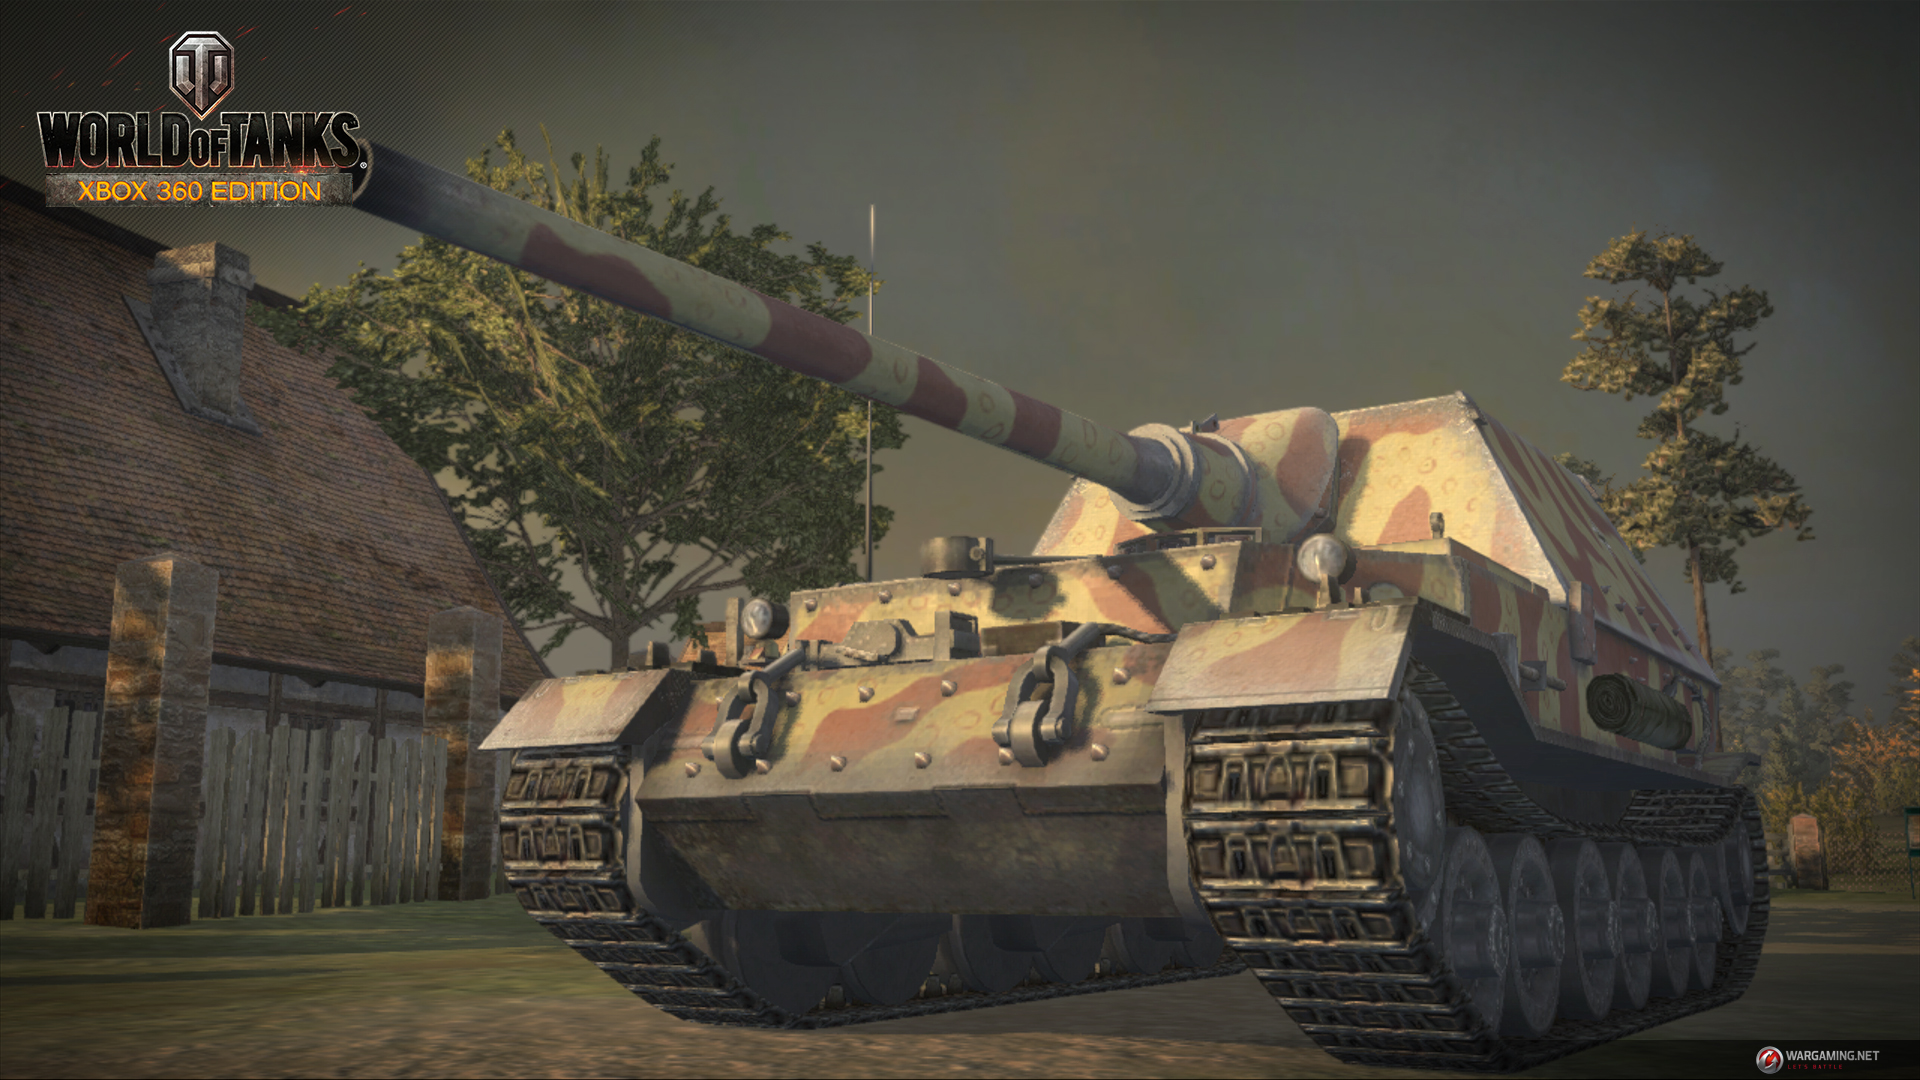 World of tanks 360. World of Tanks Xbox 360. Немецкие танки World of Tanks немецкие на Xbox one. Игры про танки в ВК. World of Tanks Xbox 360 Edition картинка.